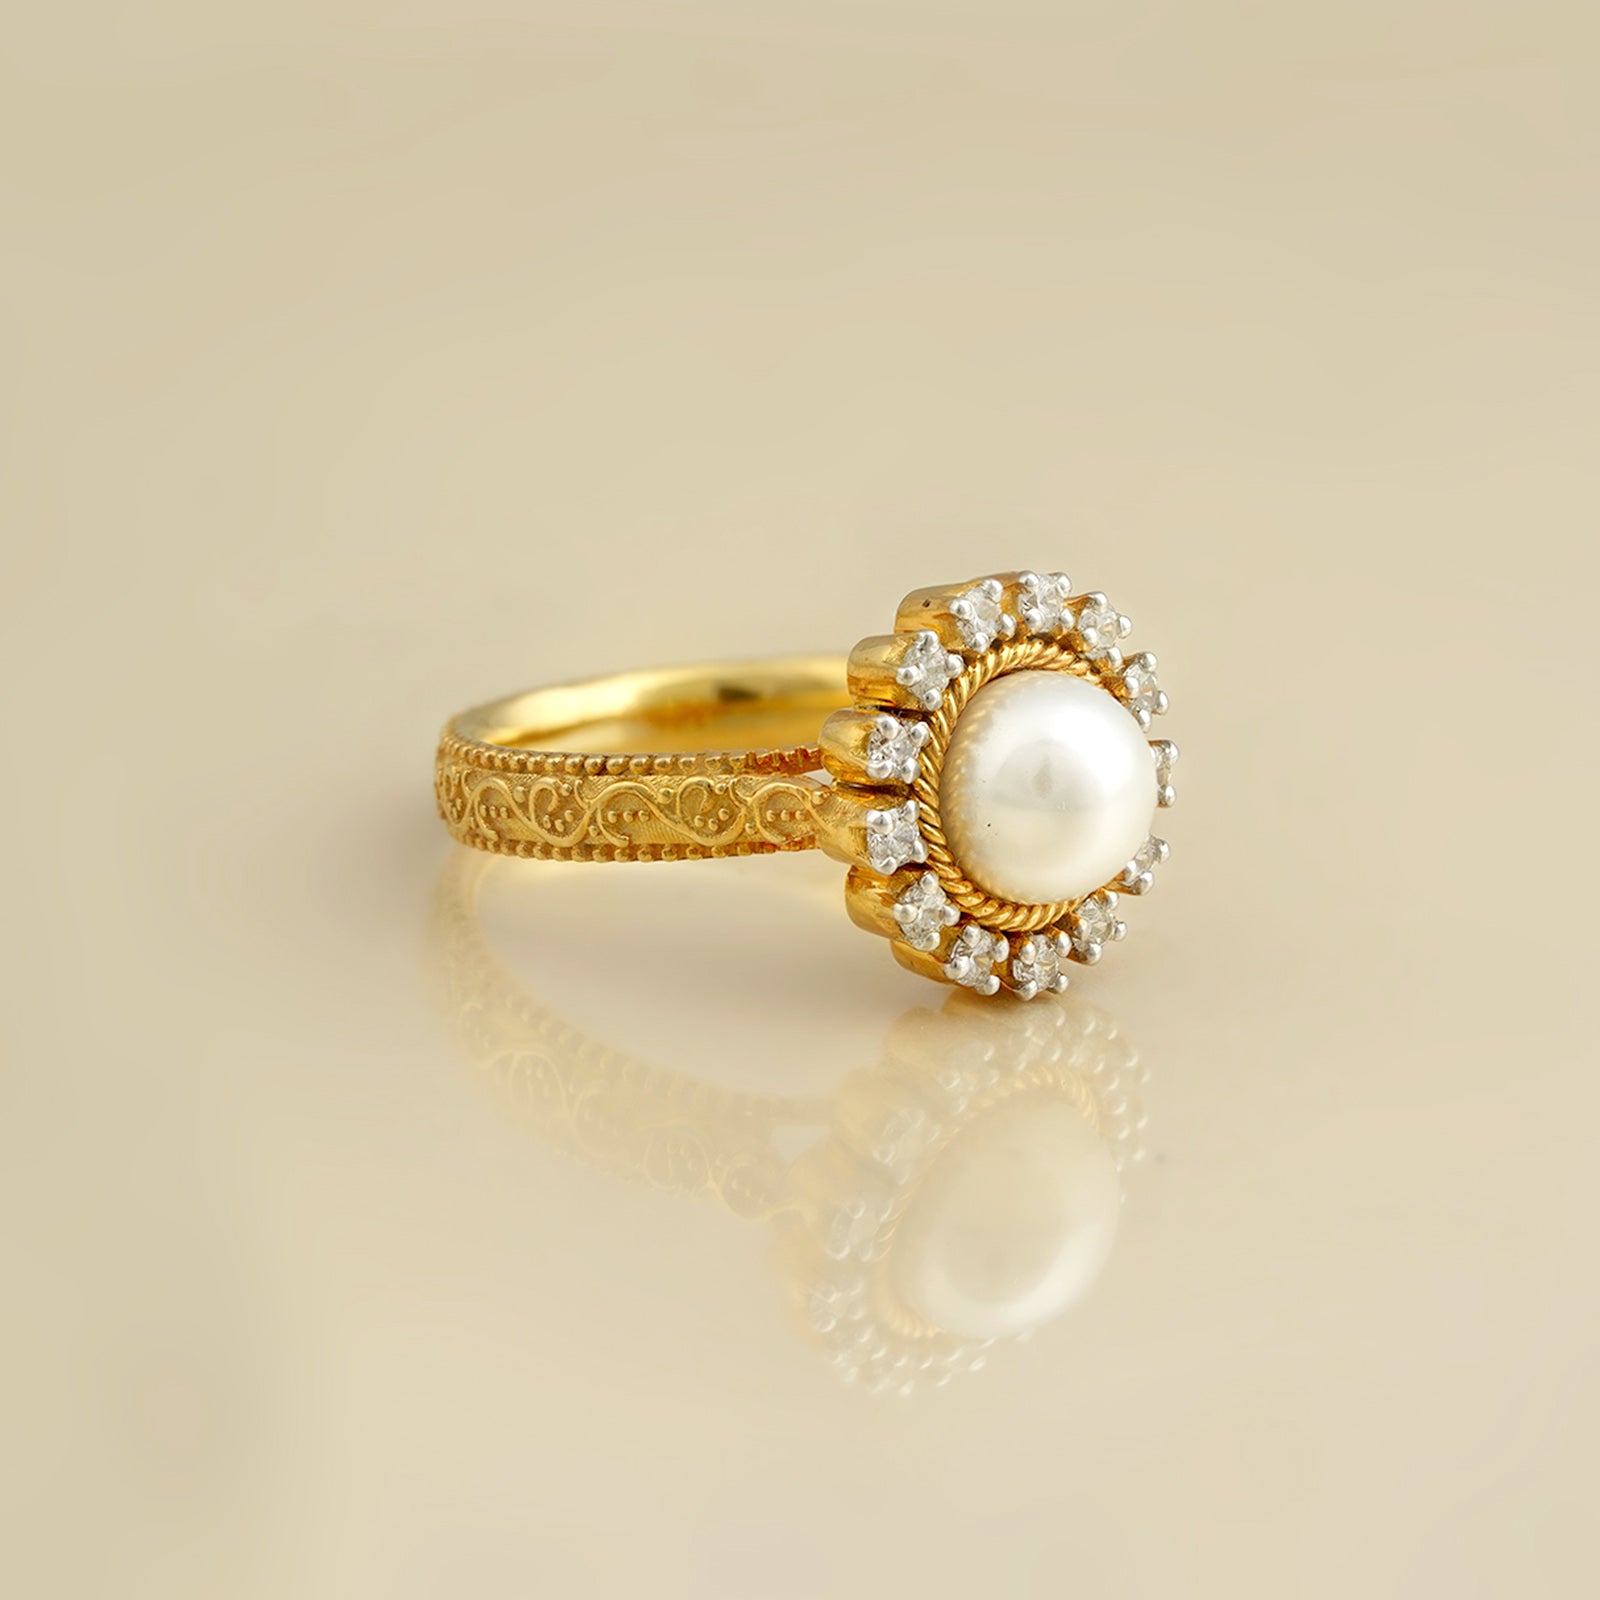 moti ring price, real pearl price, pearl ring designs, pearl gemstone, moti  stone, pearl gemstone price – CLARA